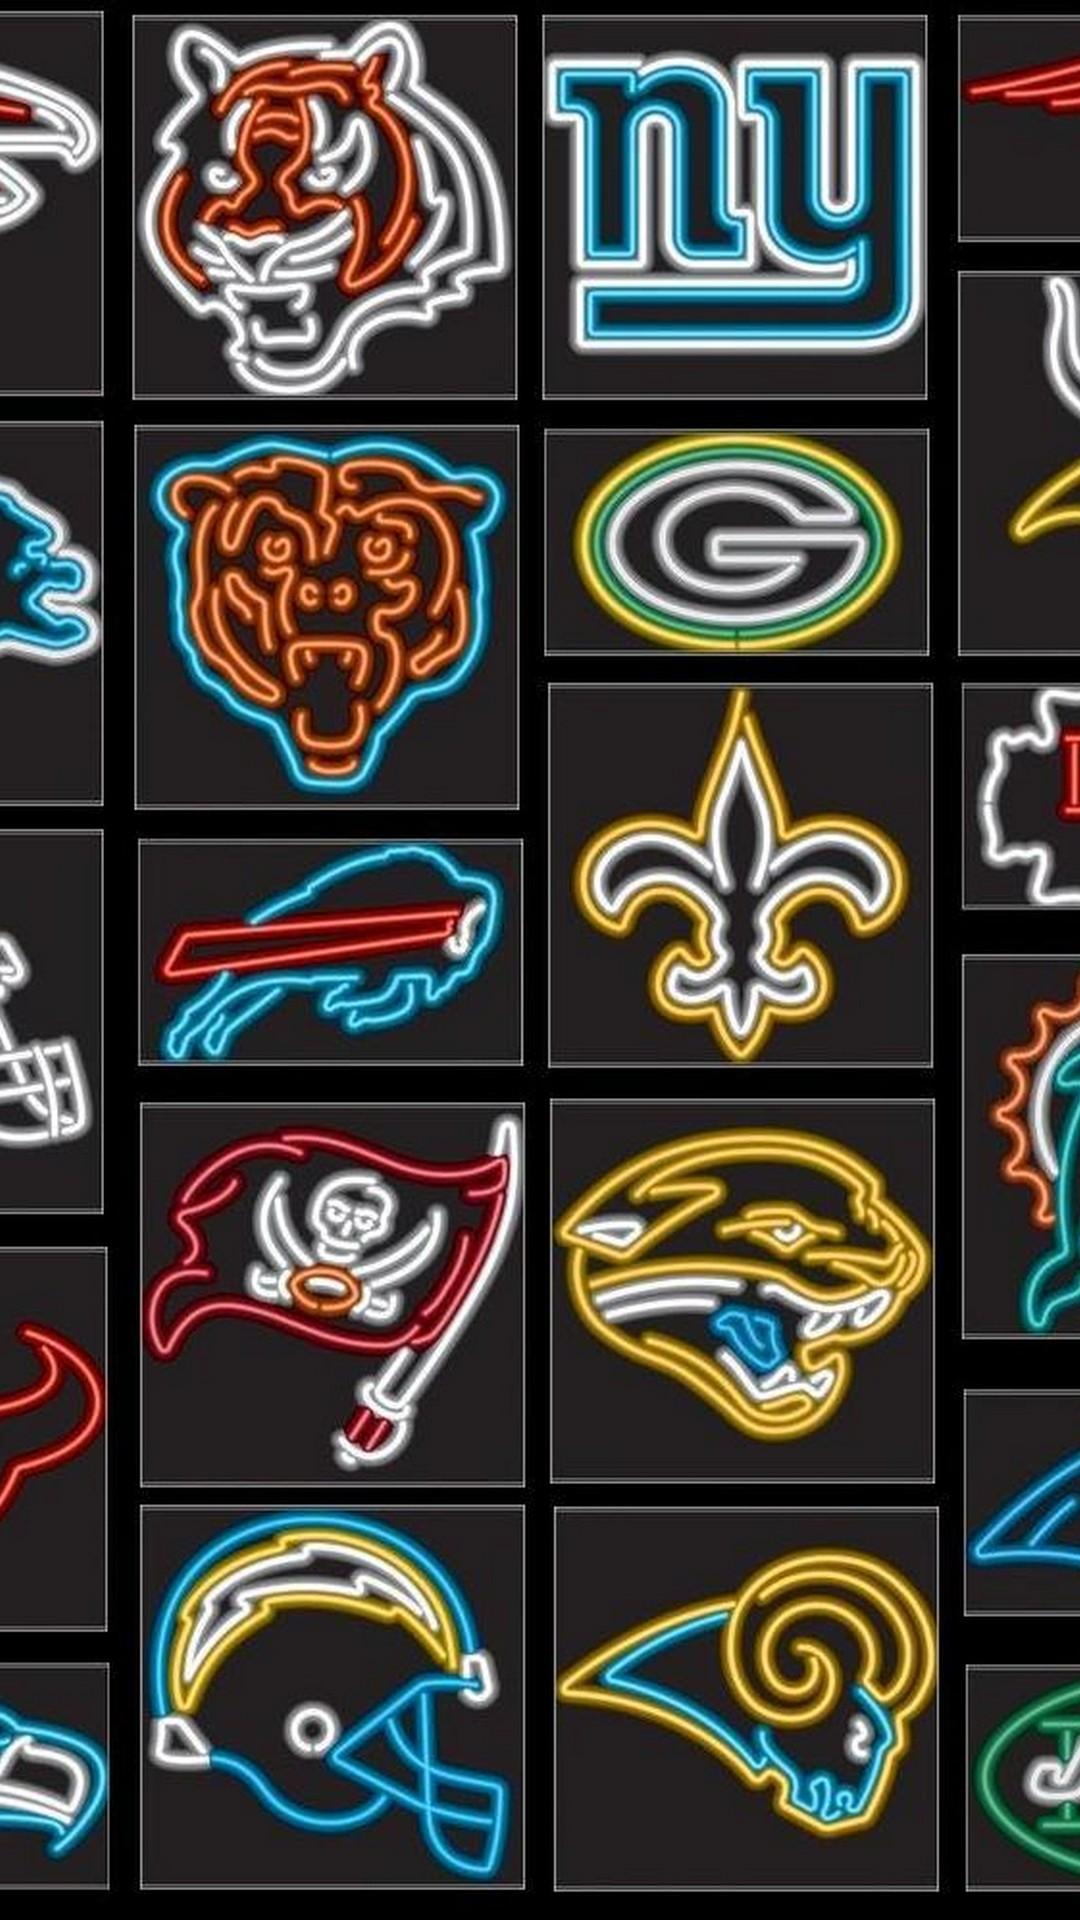 Cool NFL HD Wallpaper For iPhone NFL Football Wallpaper